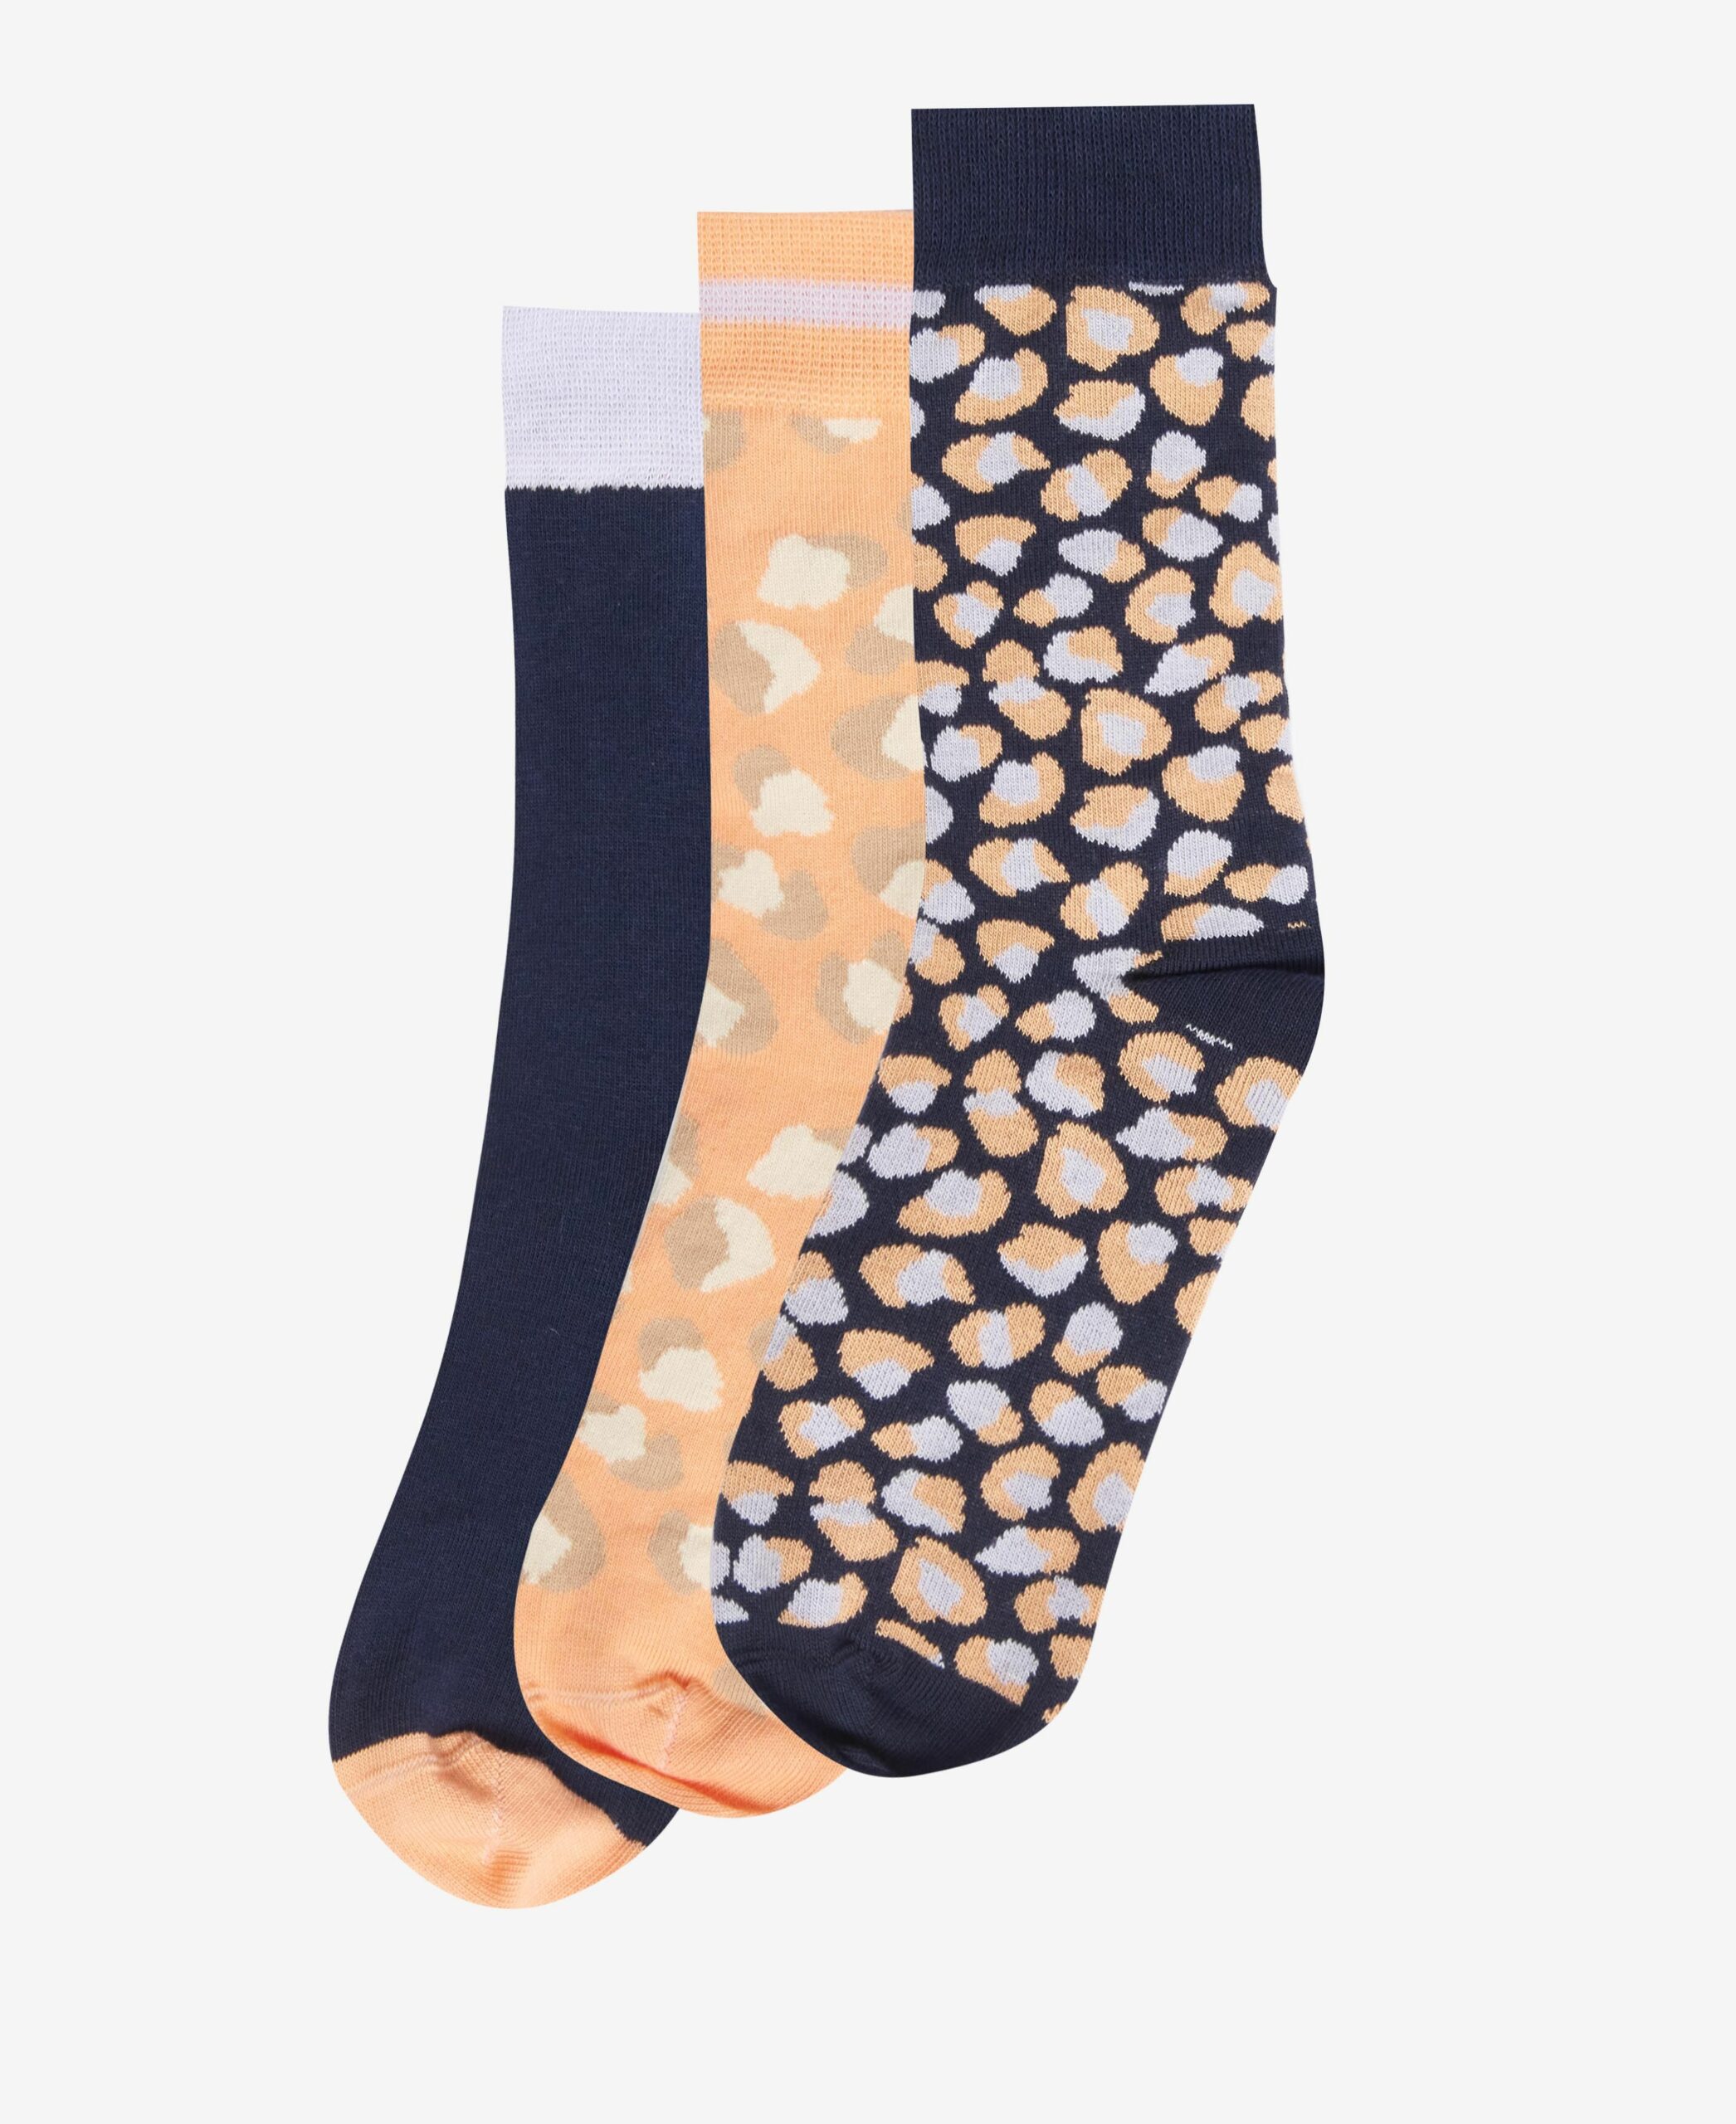 Barbour Animal Print Socks Gift Set Add to Wish List